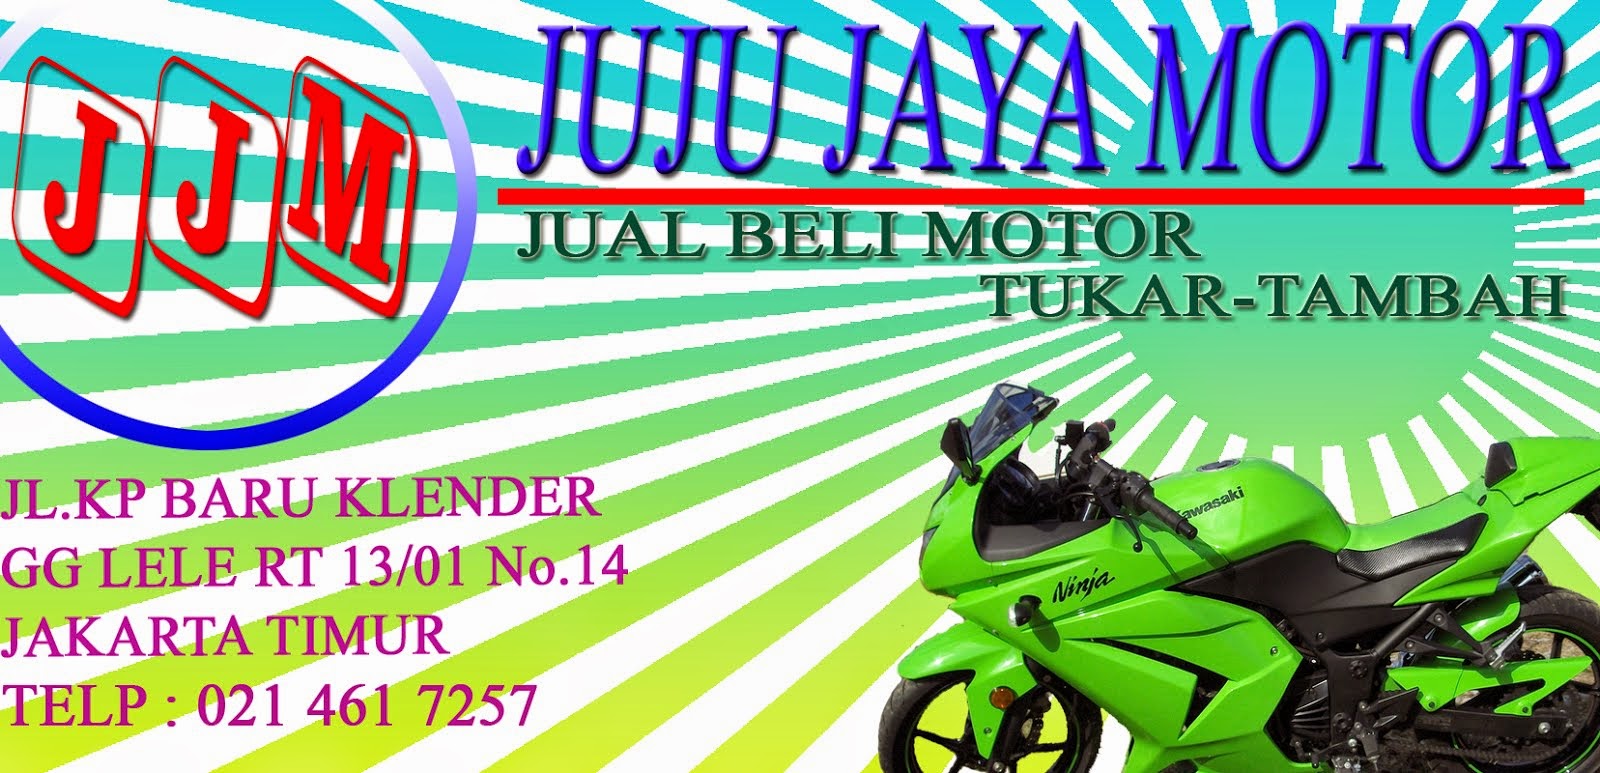 Juju Jaya motor